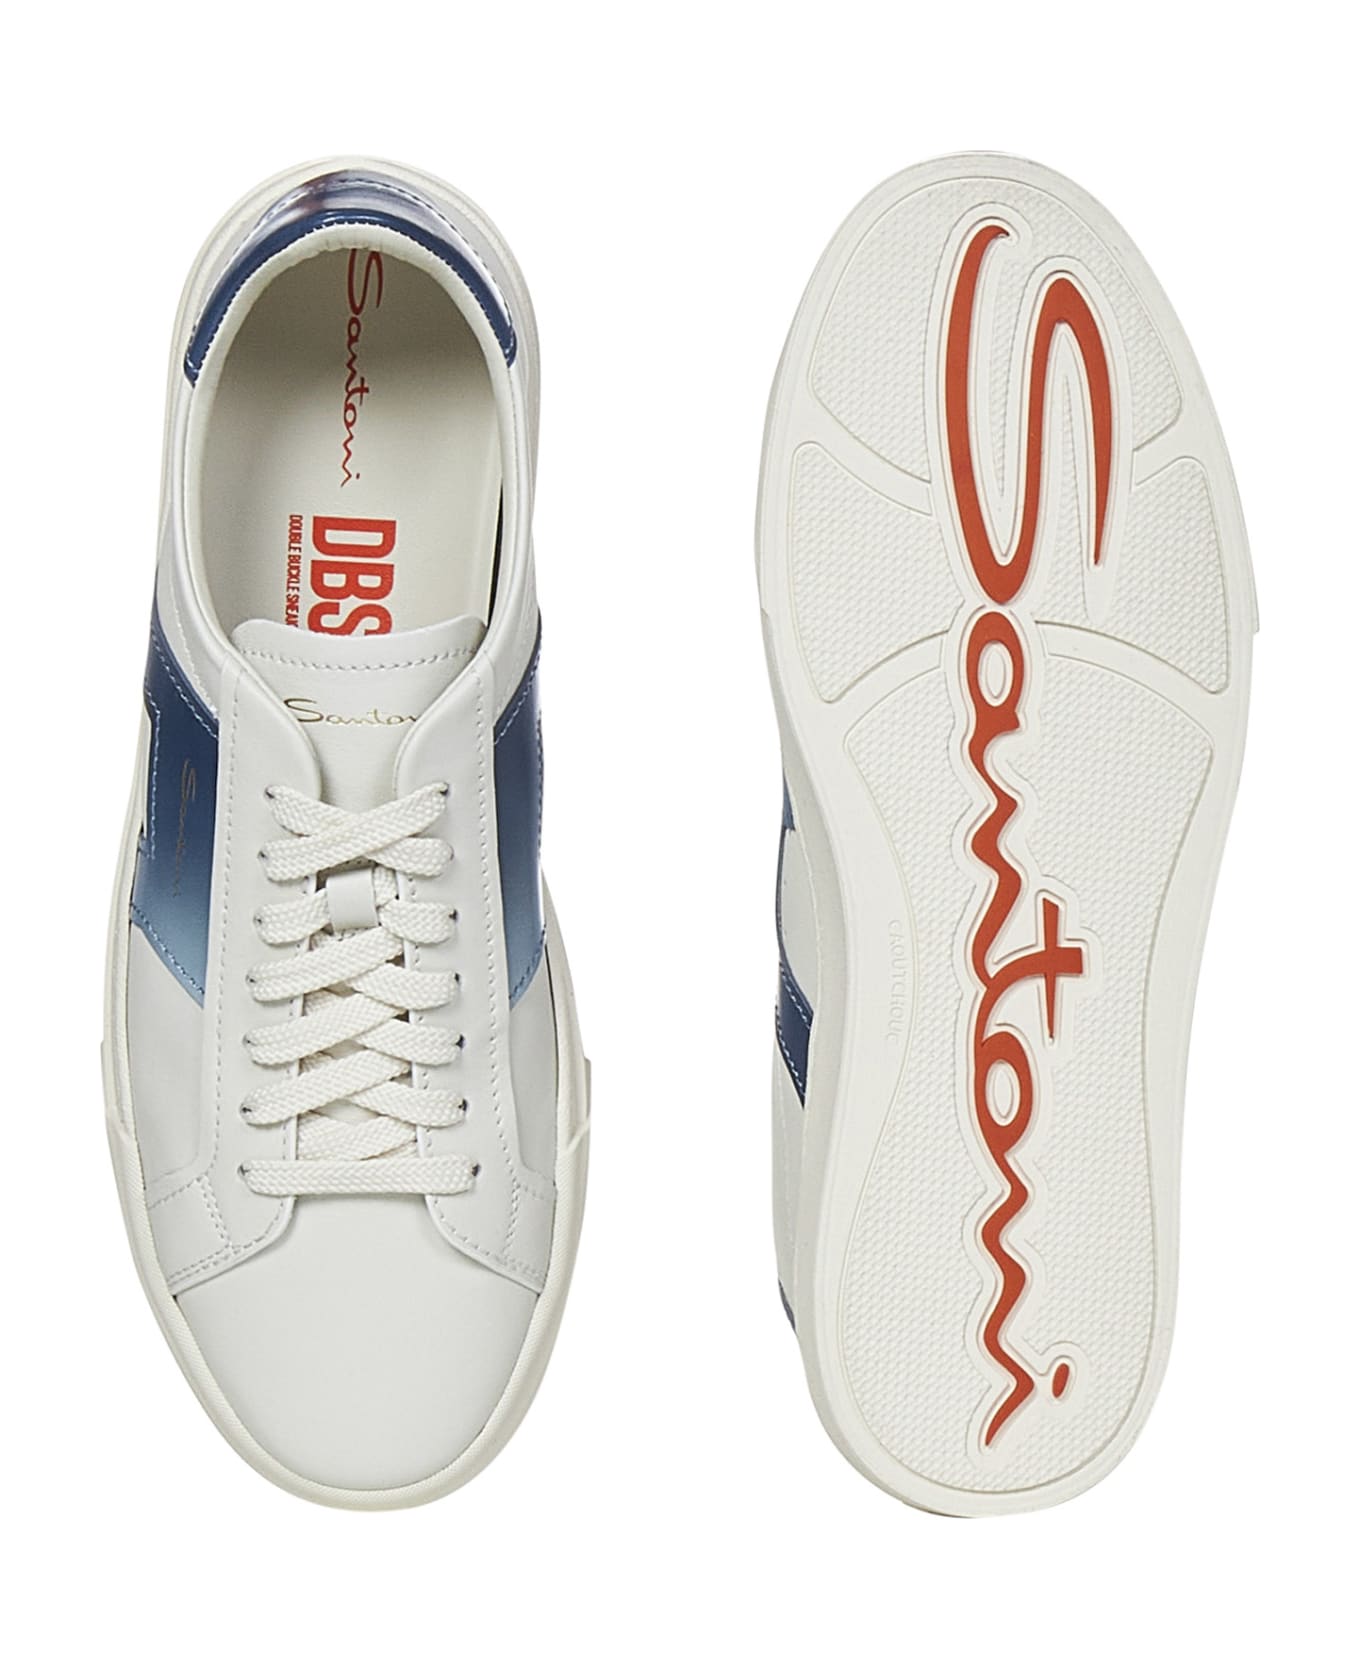 Santoni Double Buckle Sneakers - WHITE/BLUE